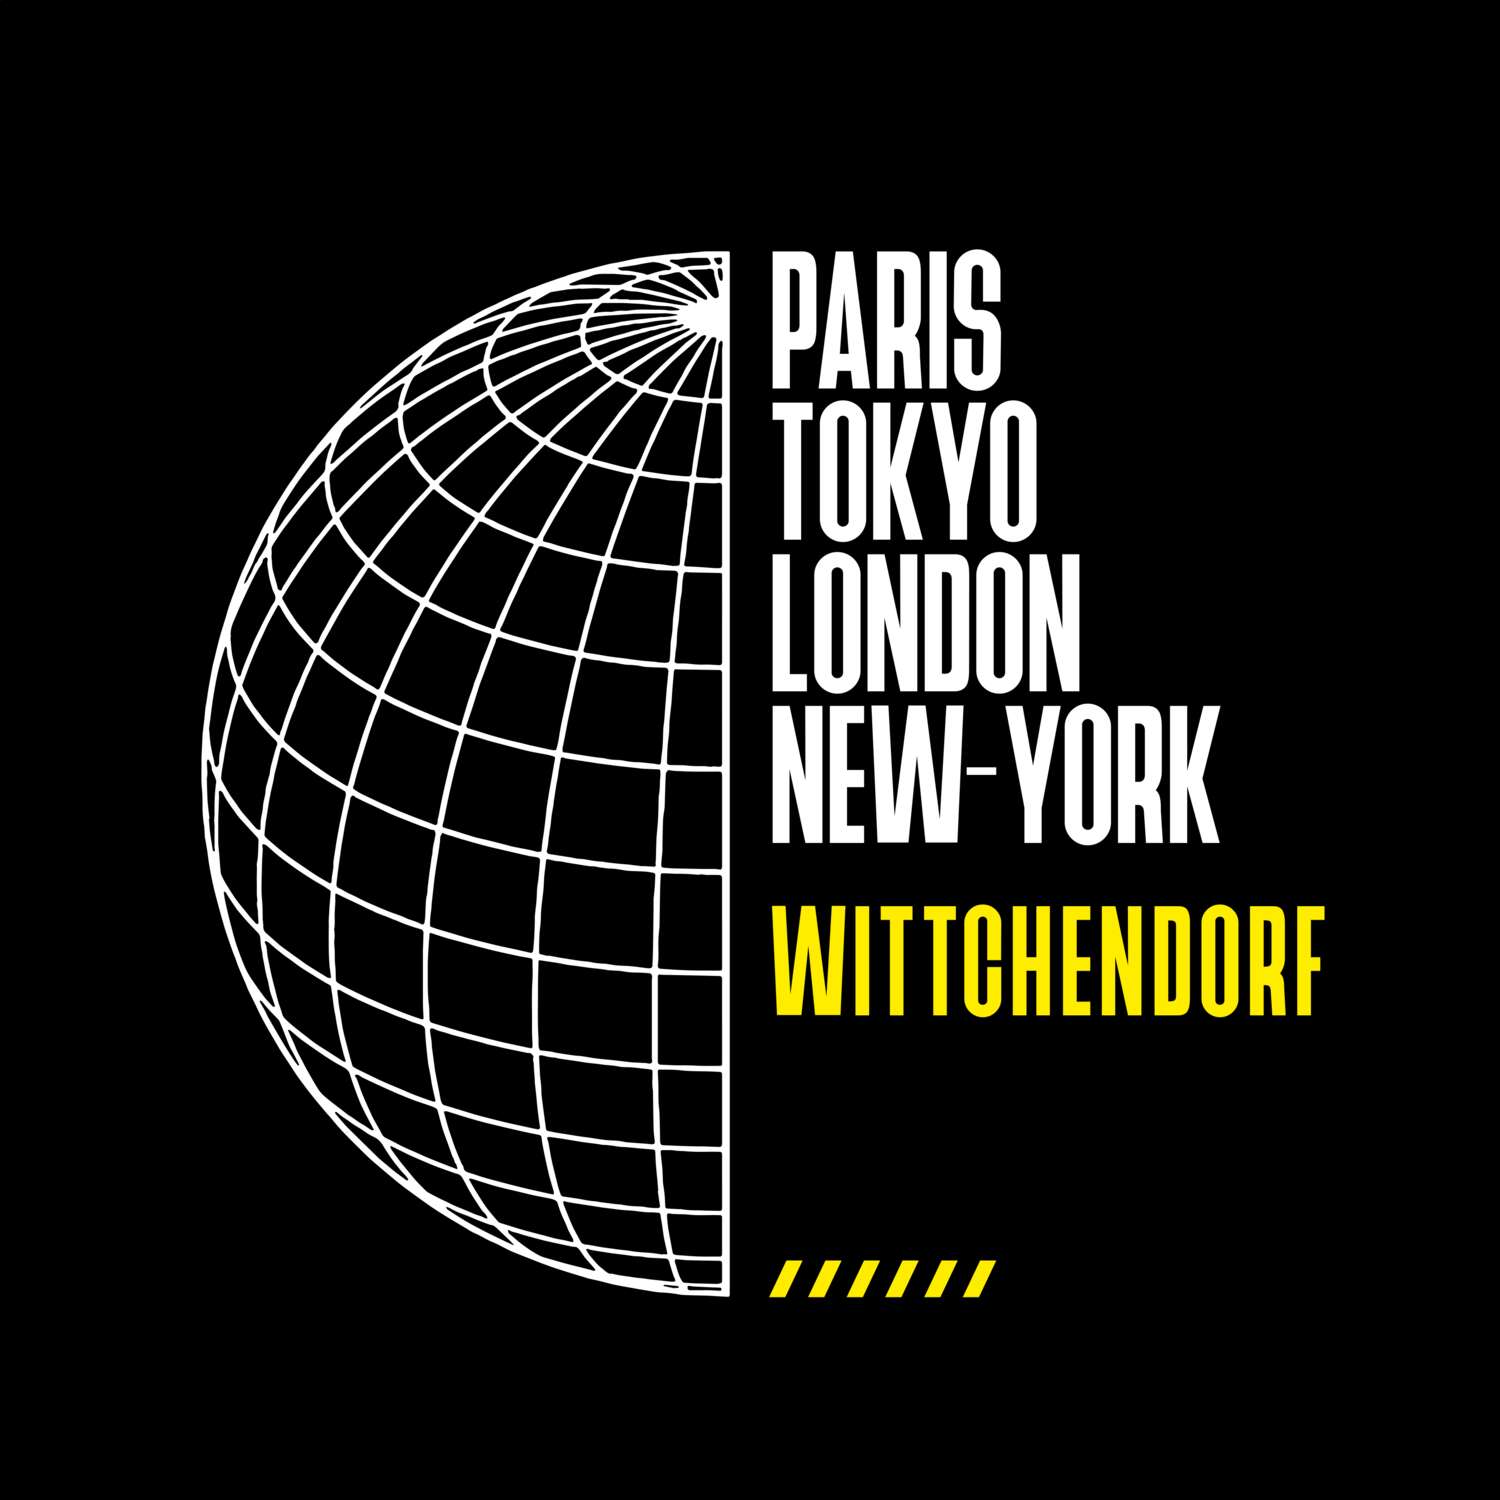 Wittchendorf T-Shirt »Paris Tokyo London«